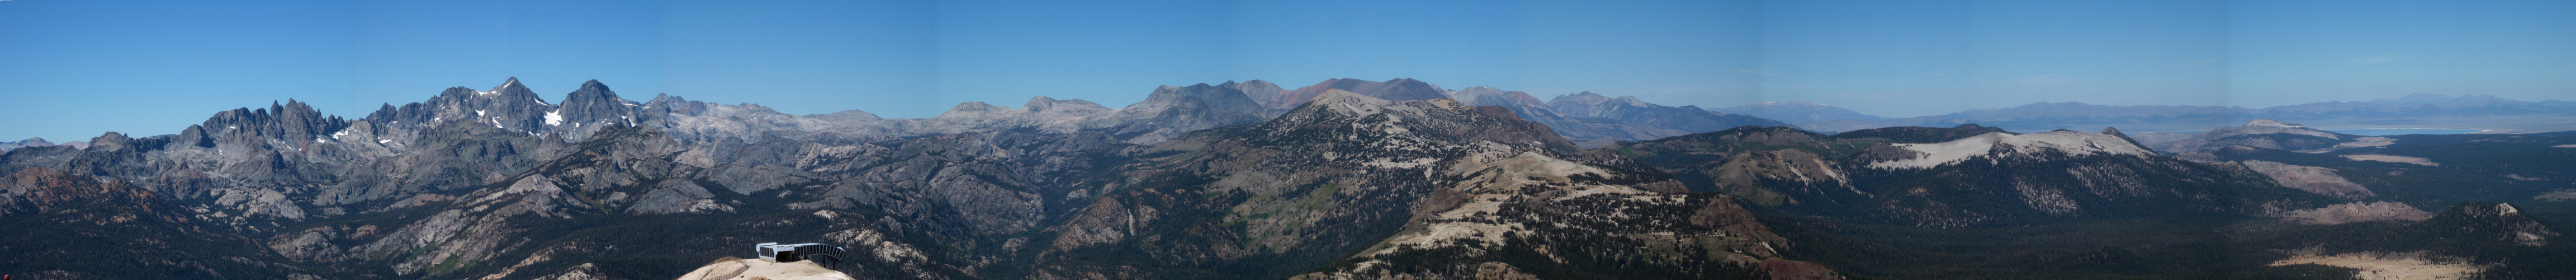 Mammoth Mountain Panorama 1.